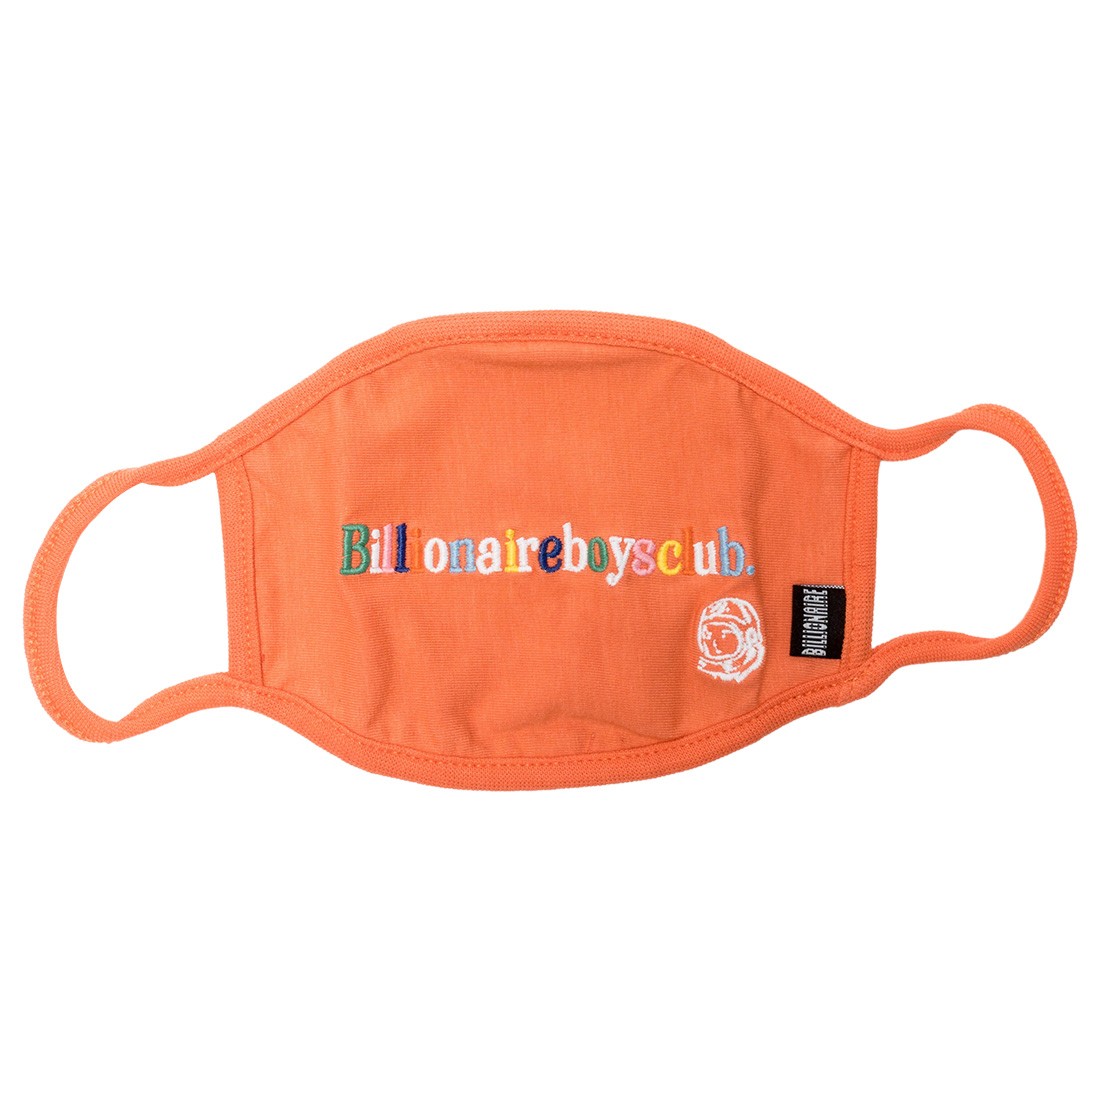 Billionaire Boys Club Letters Mask (orange)